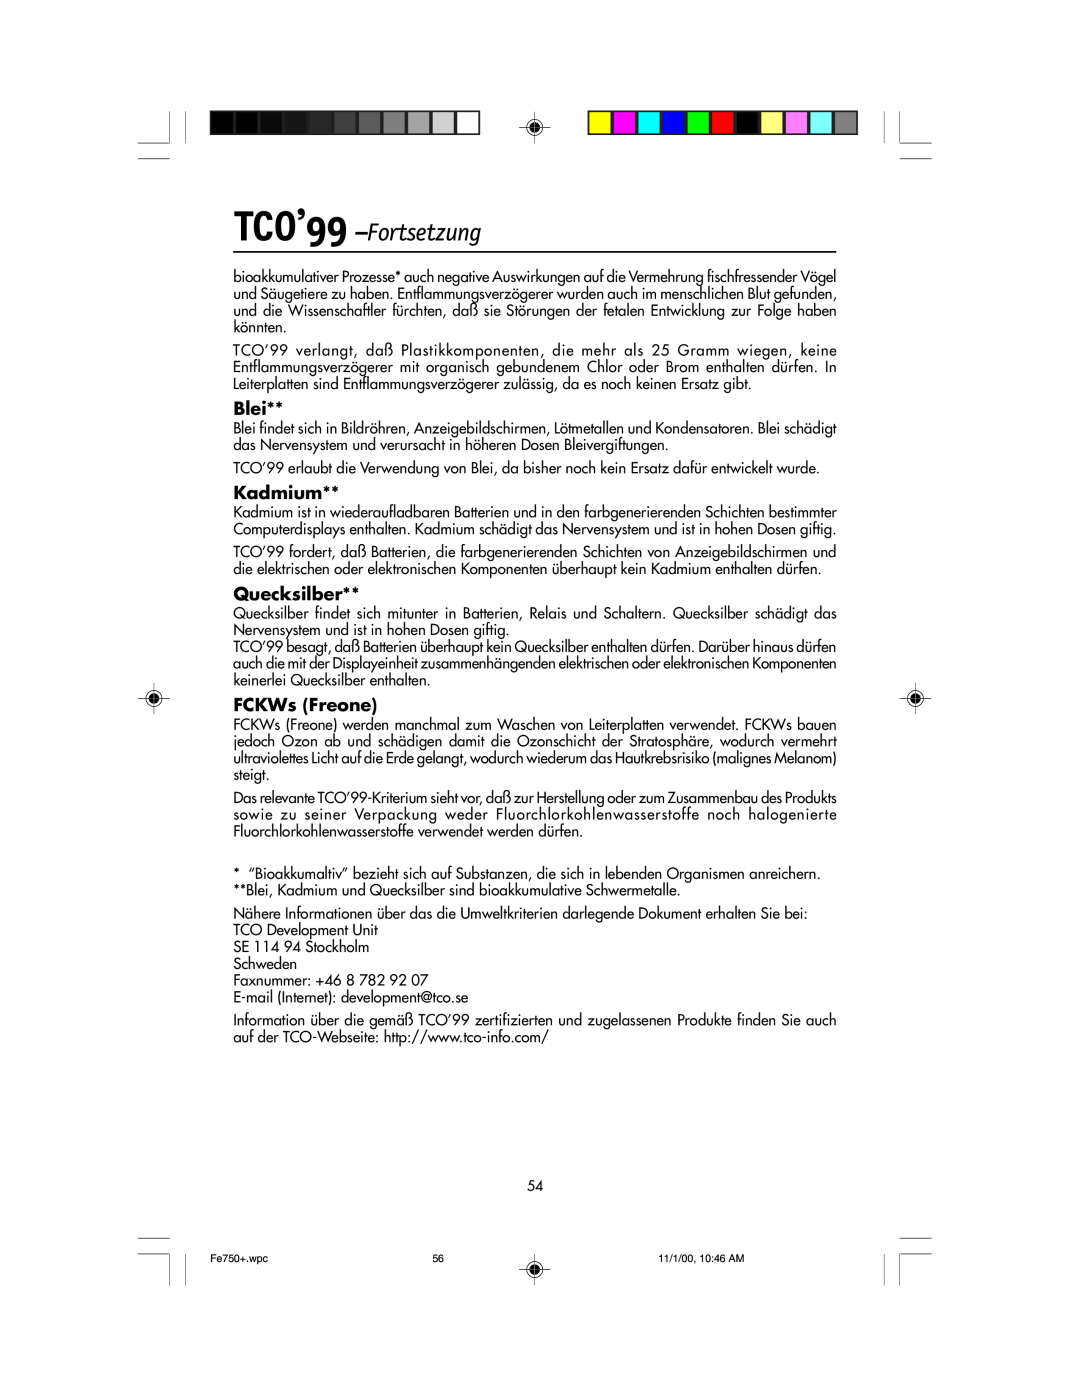 NEC FE750 Plus user manual TCO’99 -Fortsetzung, Blei, Kadmium, Quecksilber, FCKWs Freone 